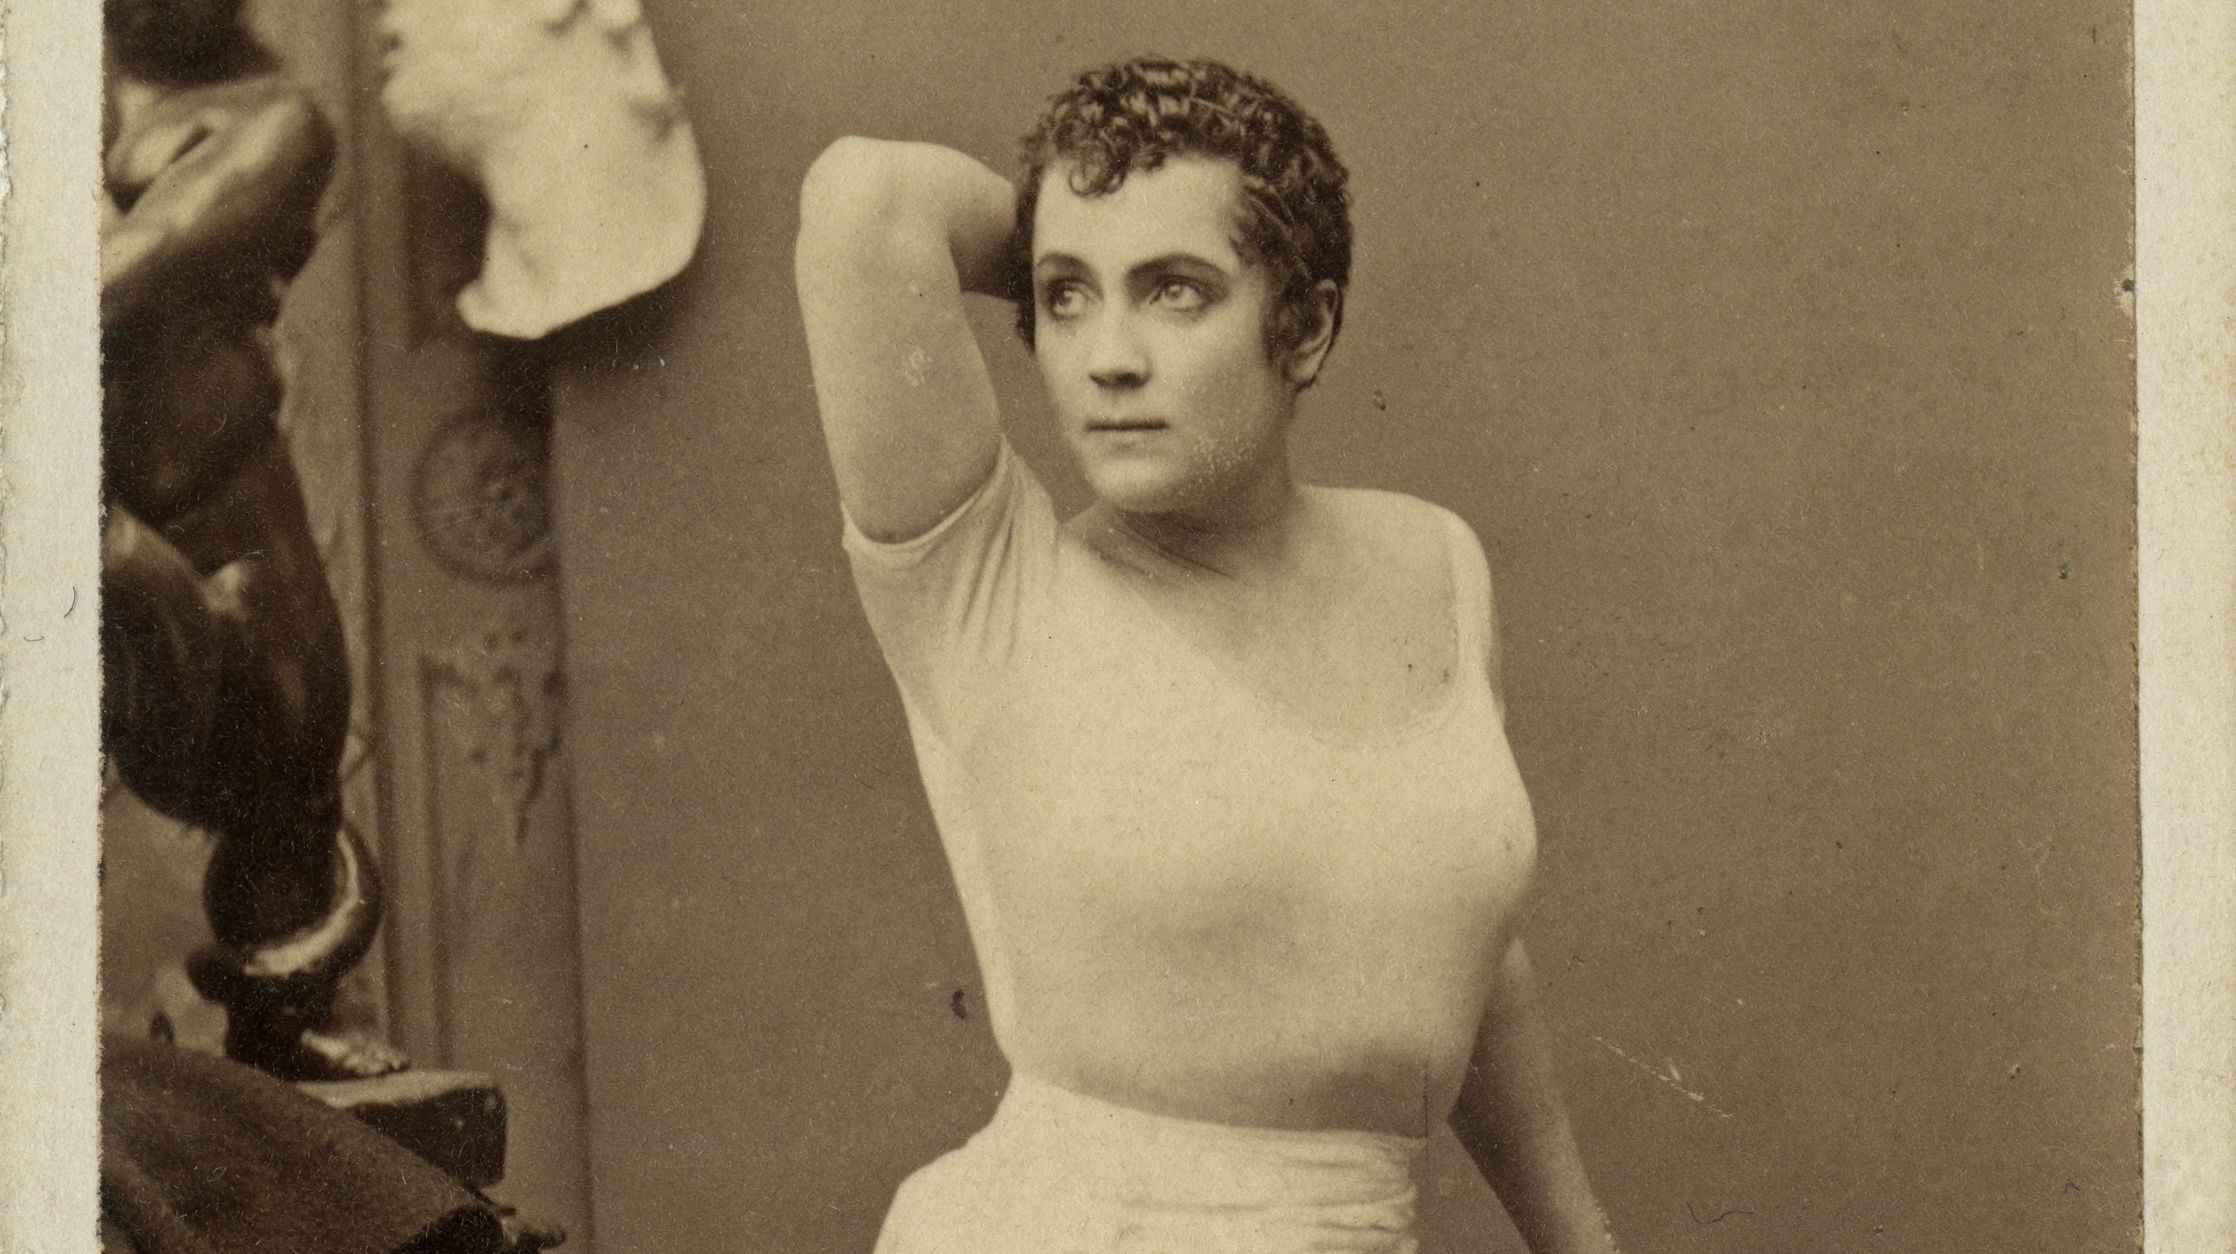 New York City Exhibition Celebrates The Rebellious Victorian Era Women